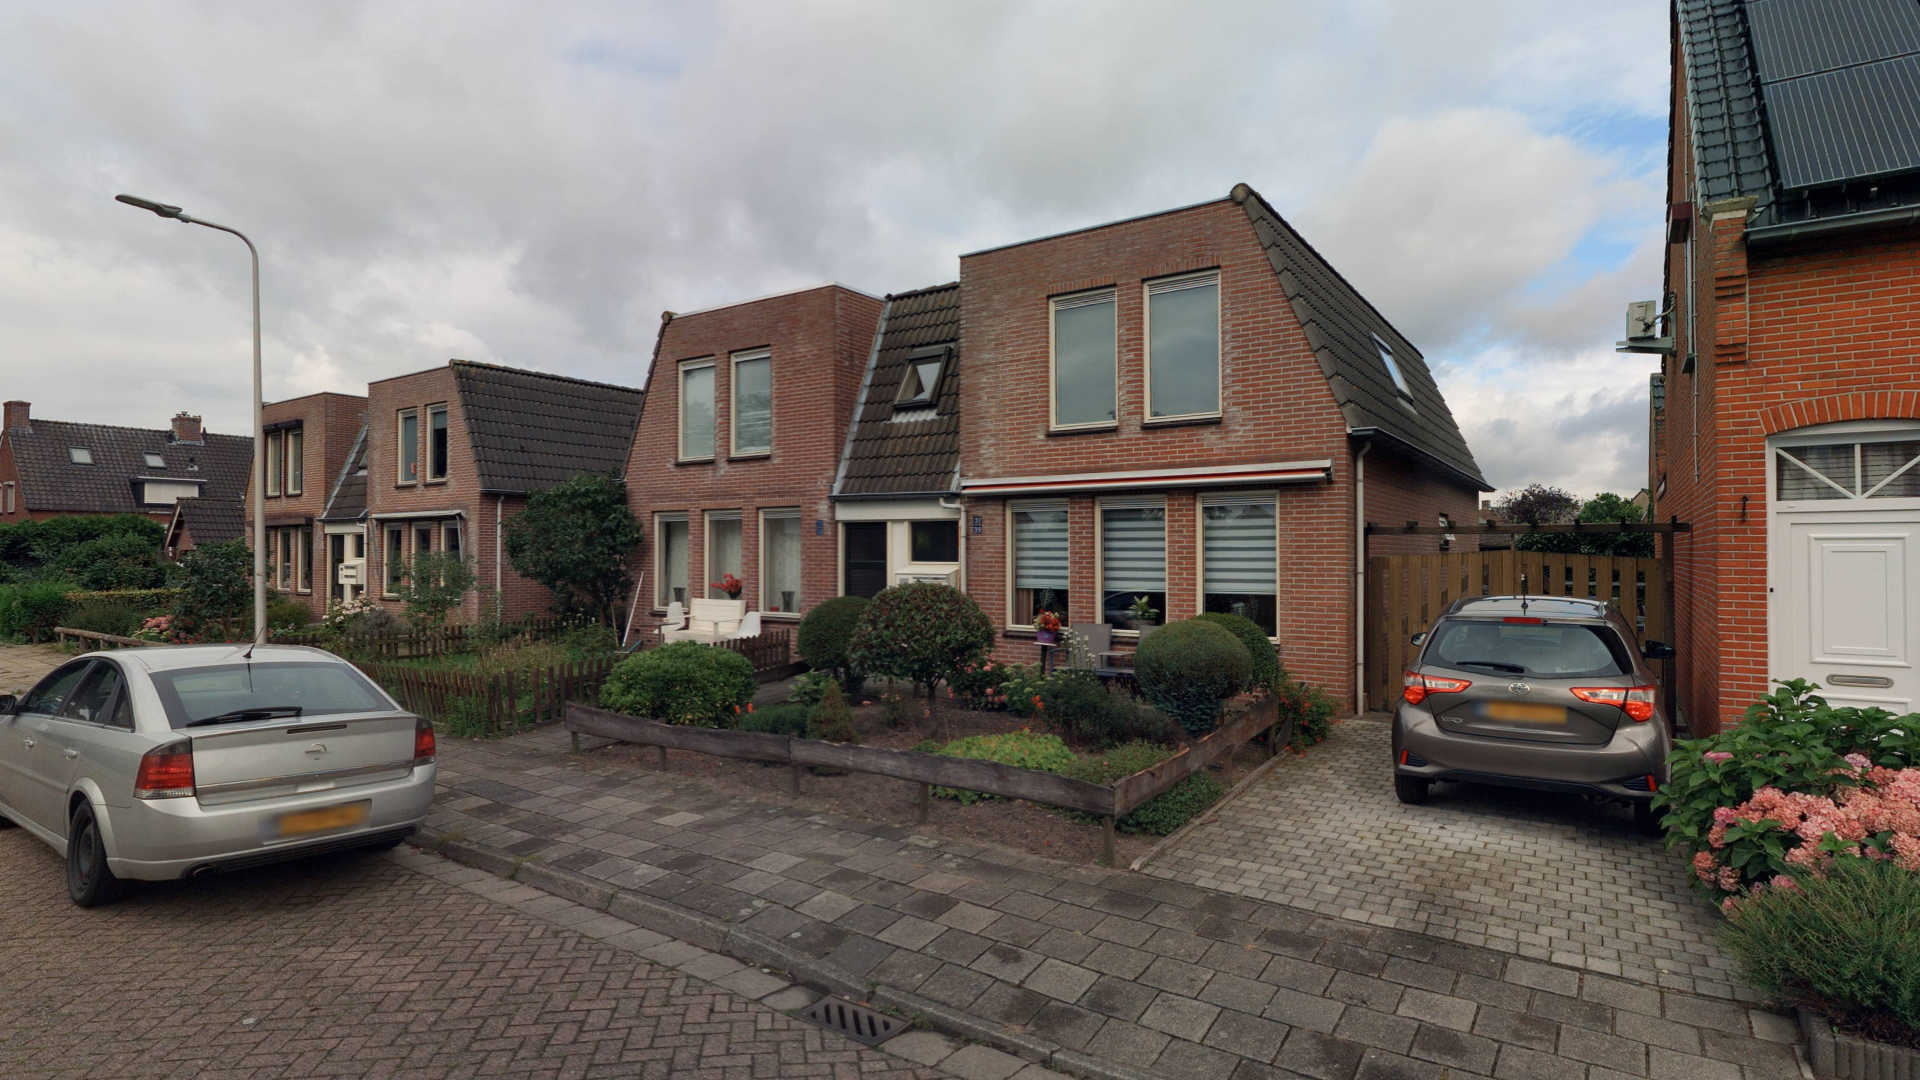 Breestraat 39, 4645 EC Putte, Nederland